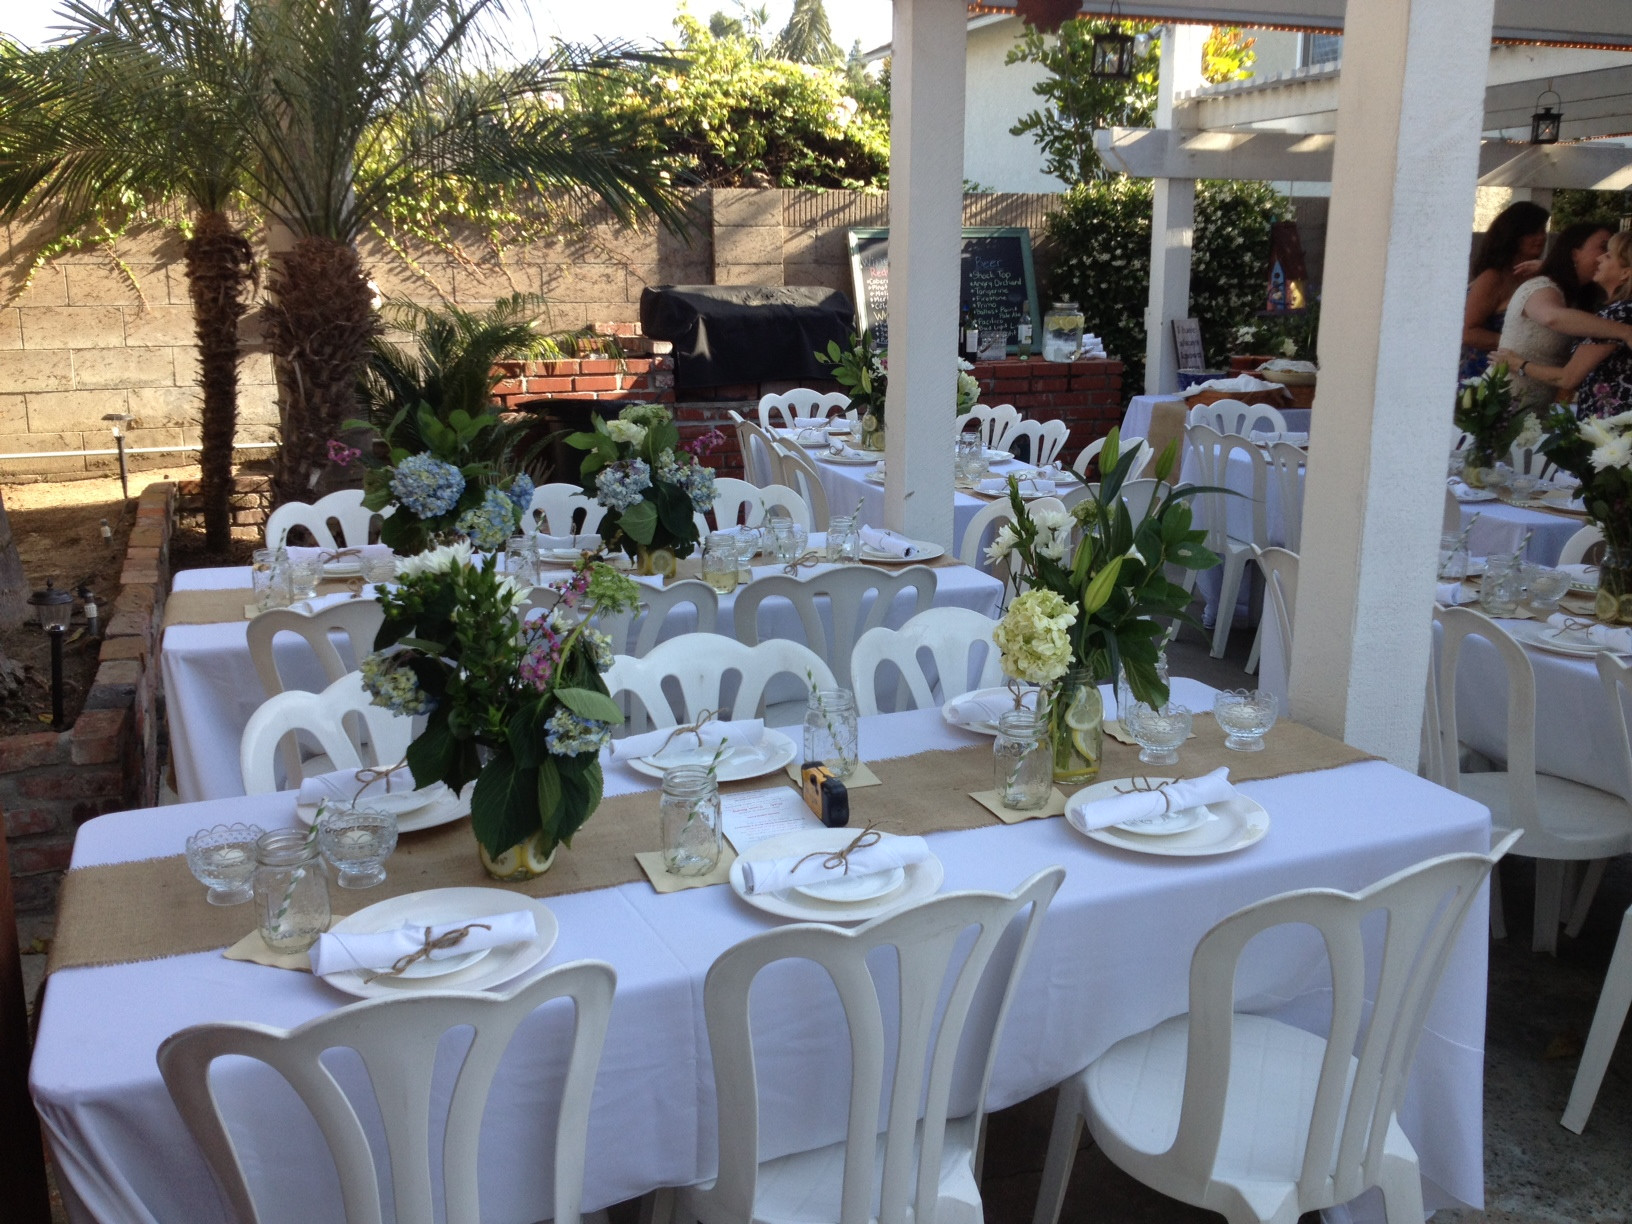 Best ideas about DIY Wedding Reception
. Save or Pin Backyard DIY Wedding Reception Now.